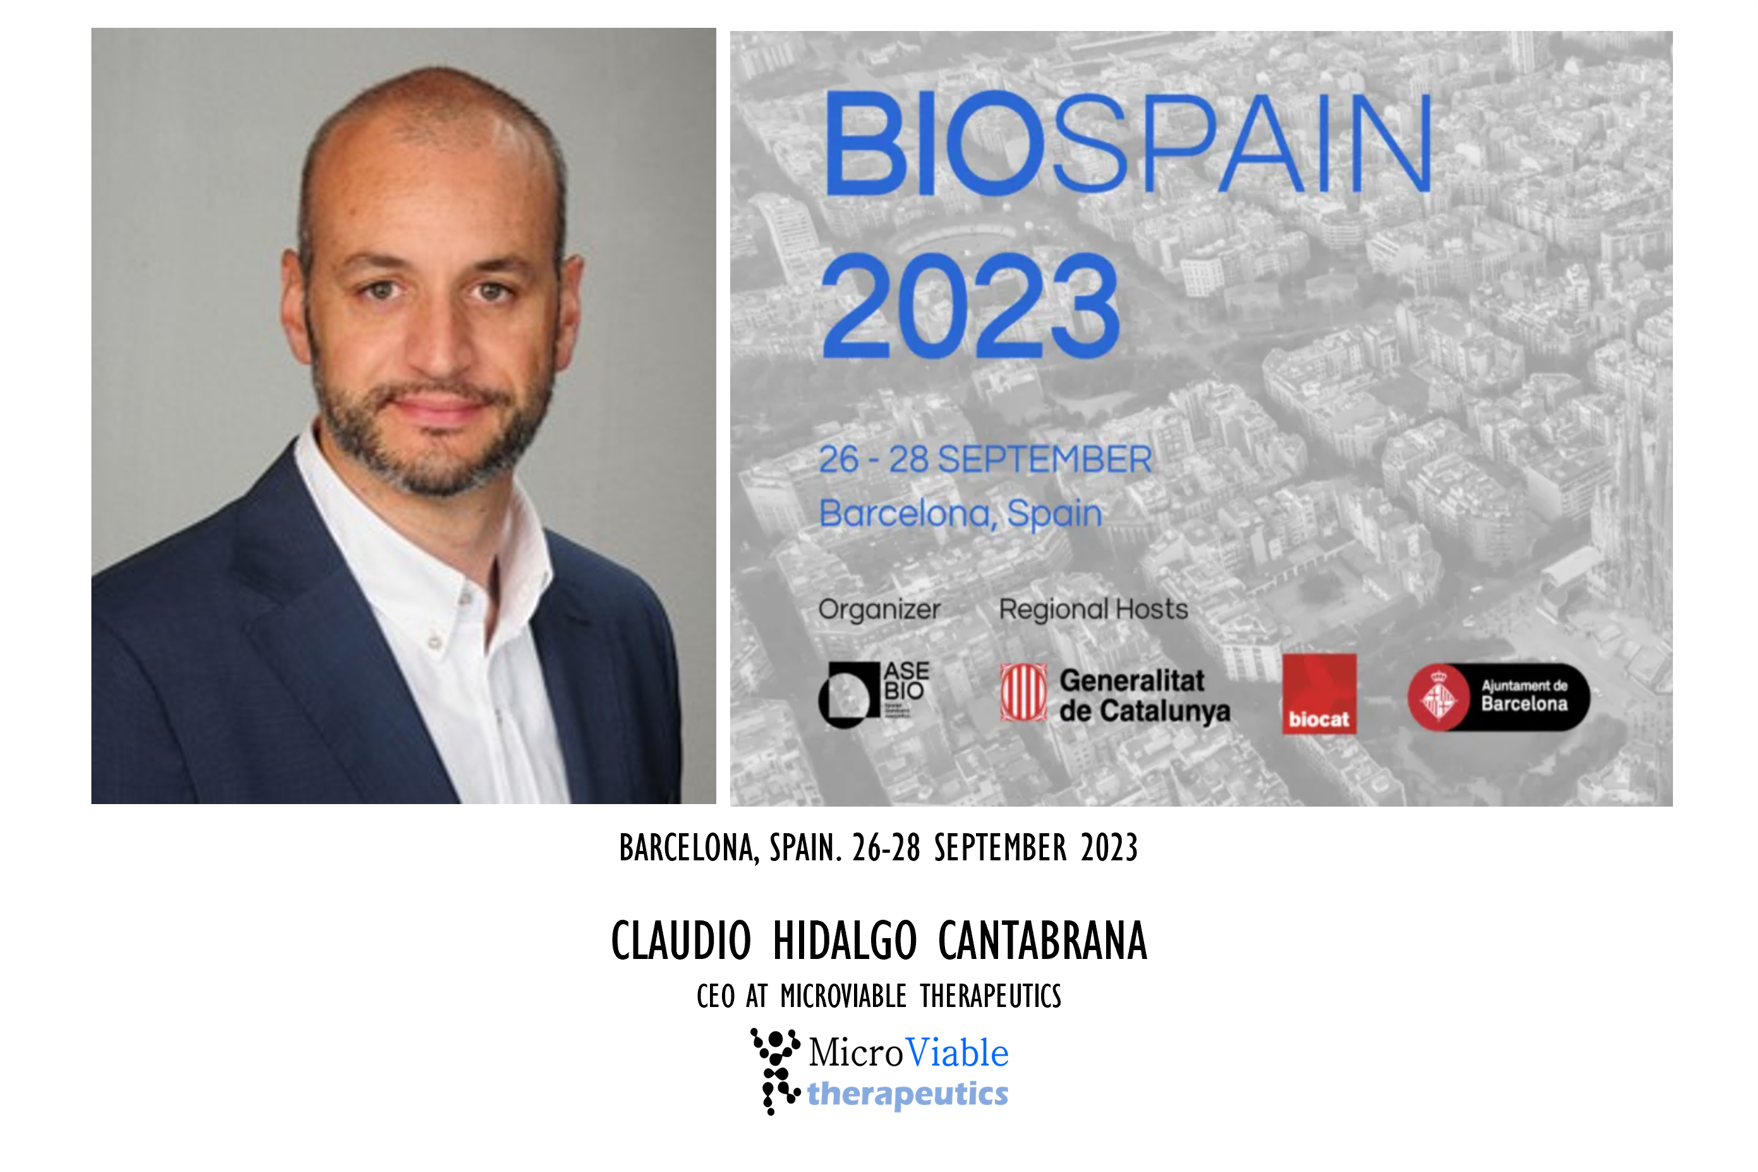 Microviable Therapeutics will be attending BioSpain 2023